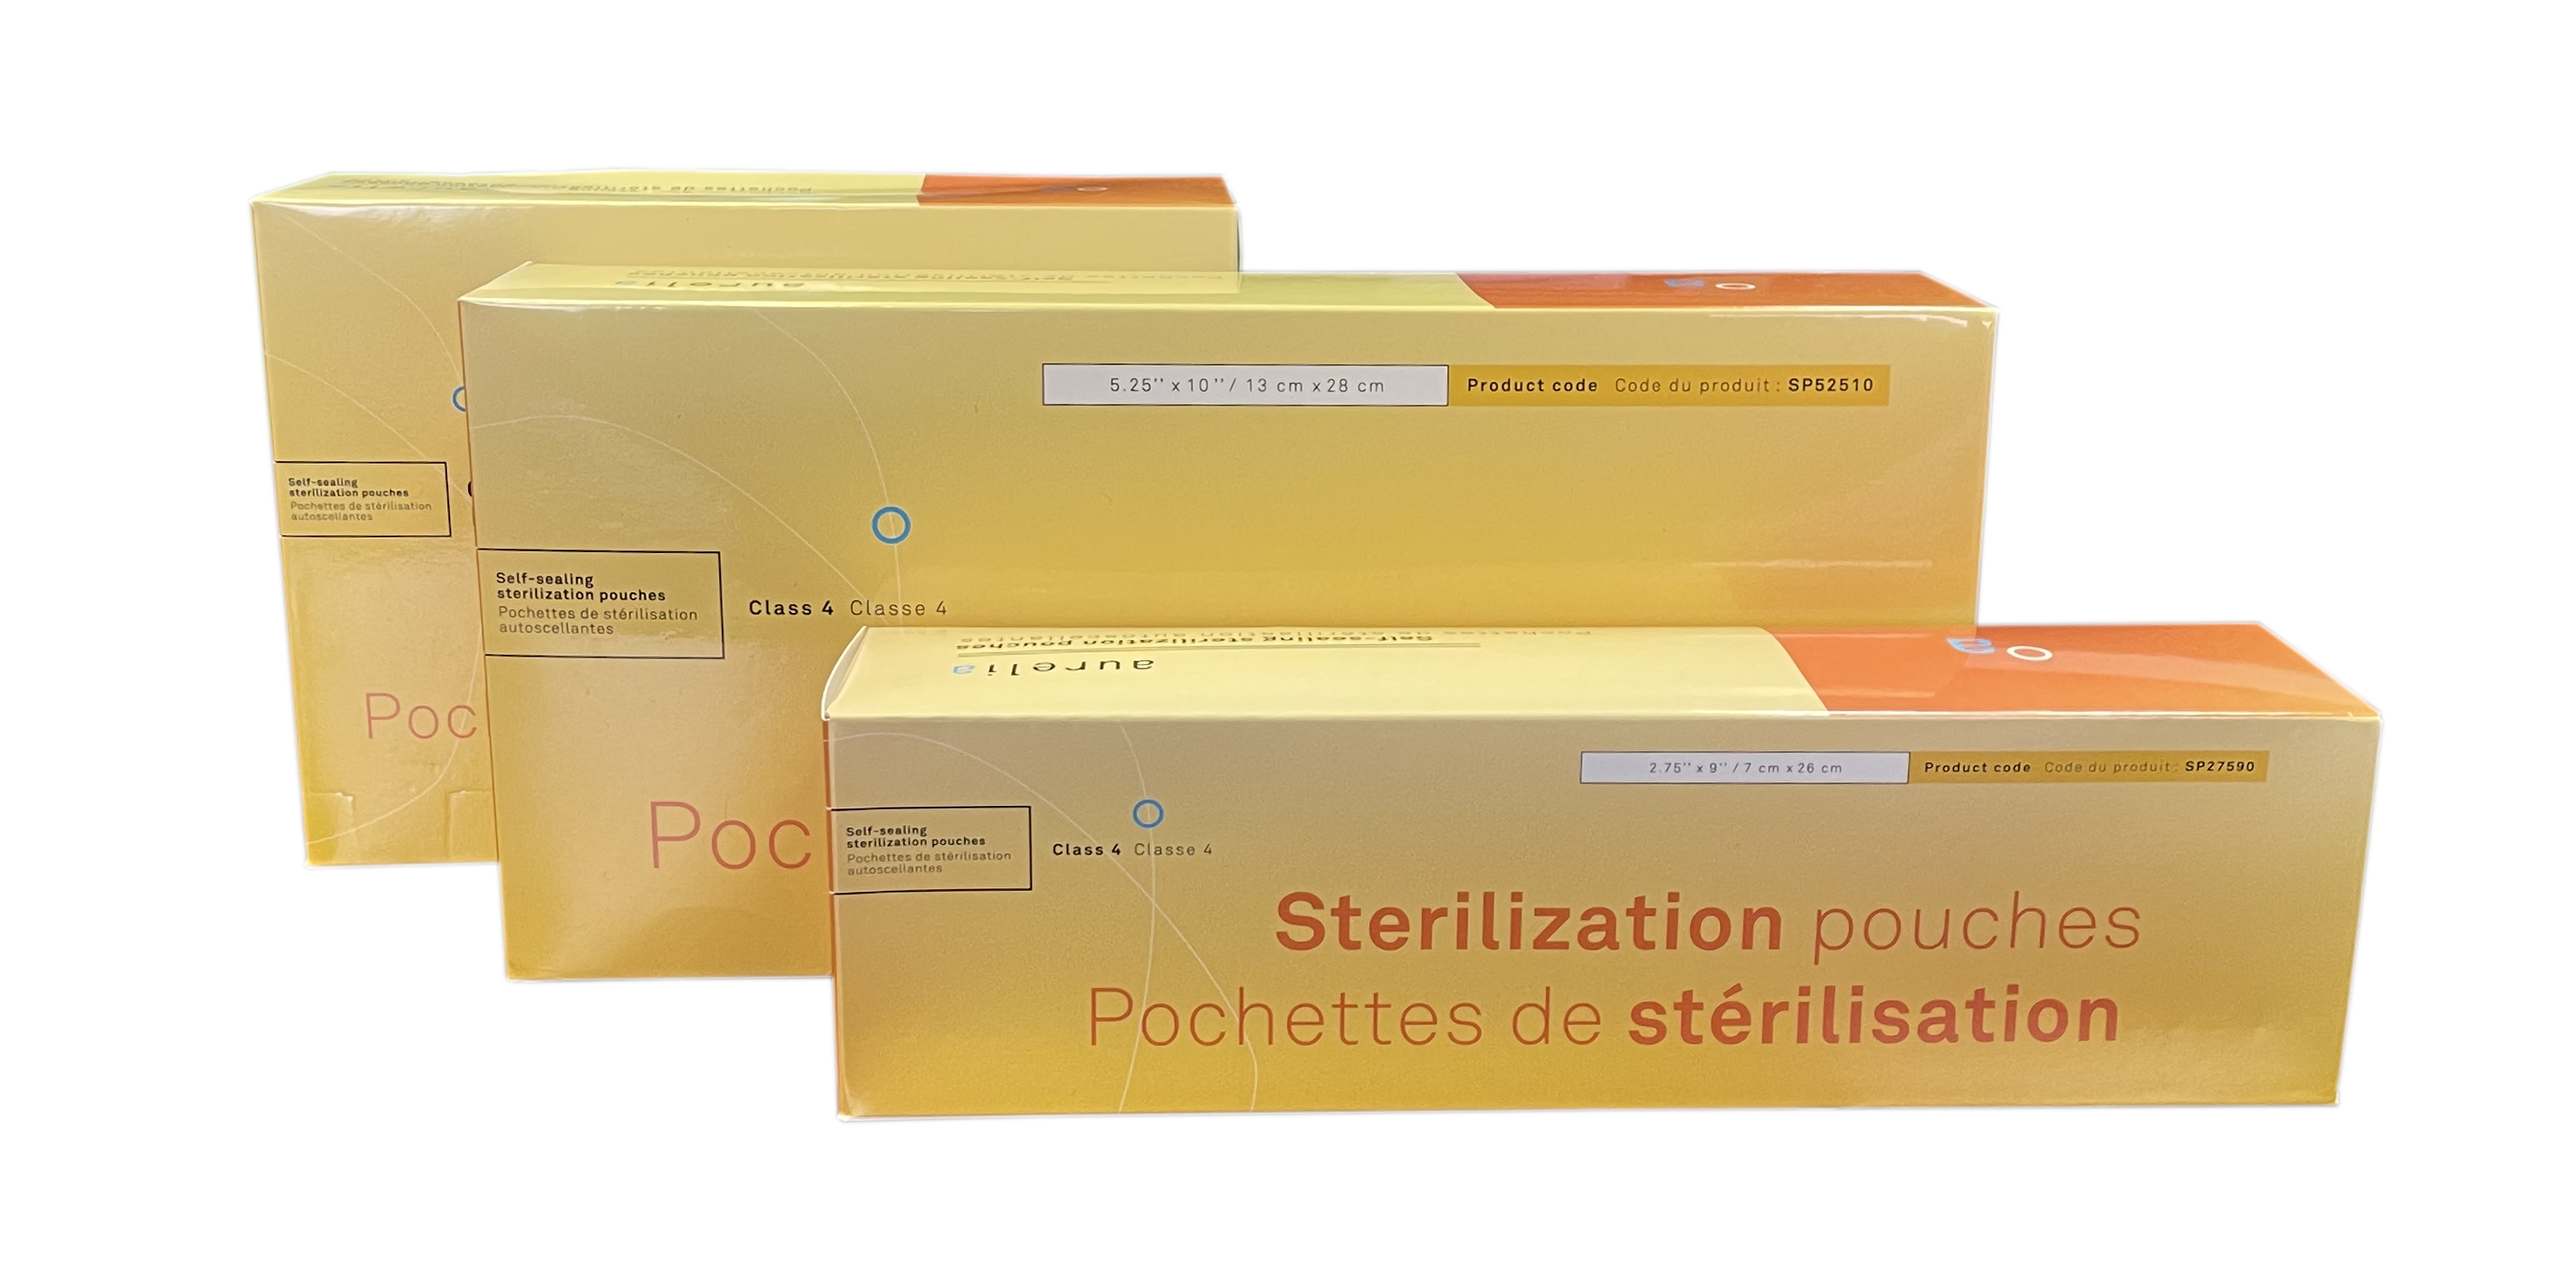 Self-sealing sterilization pouches